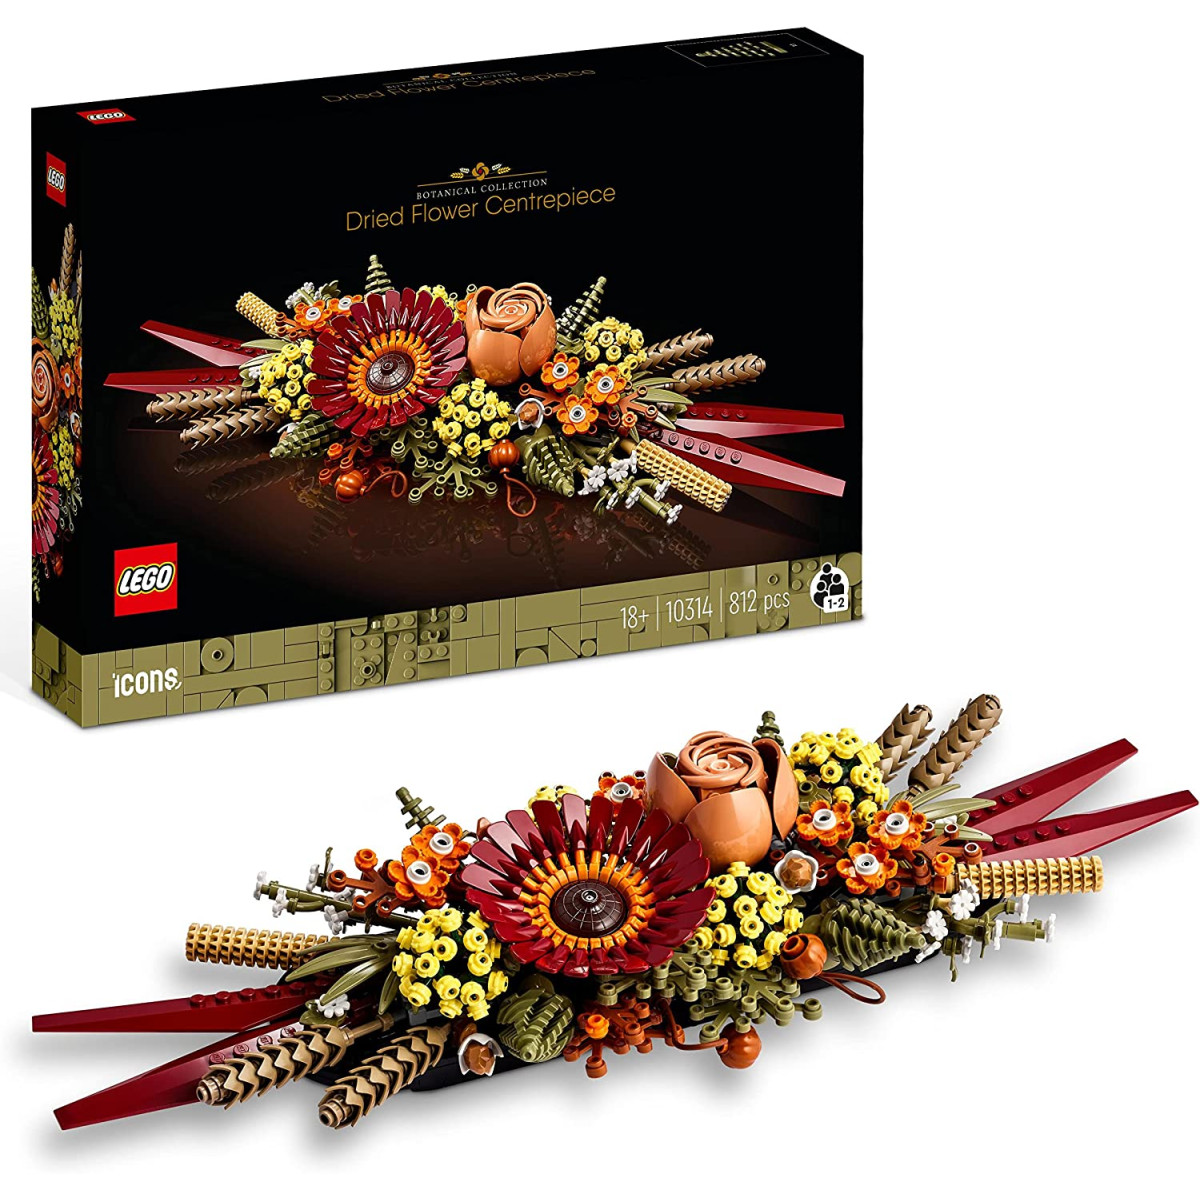 LEGO 10314 - Creator Expert Centrotavola di fiori secchi